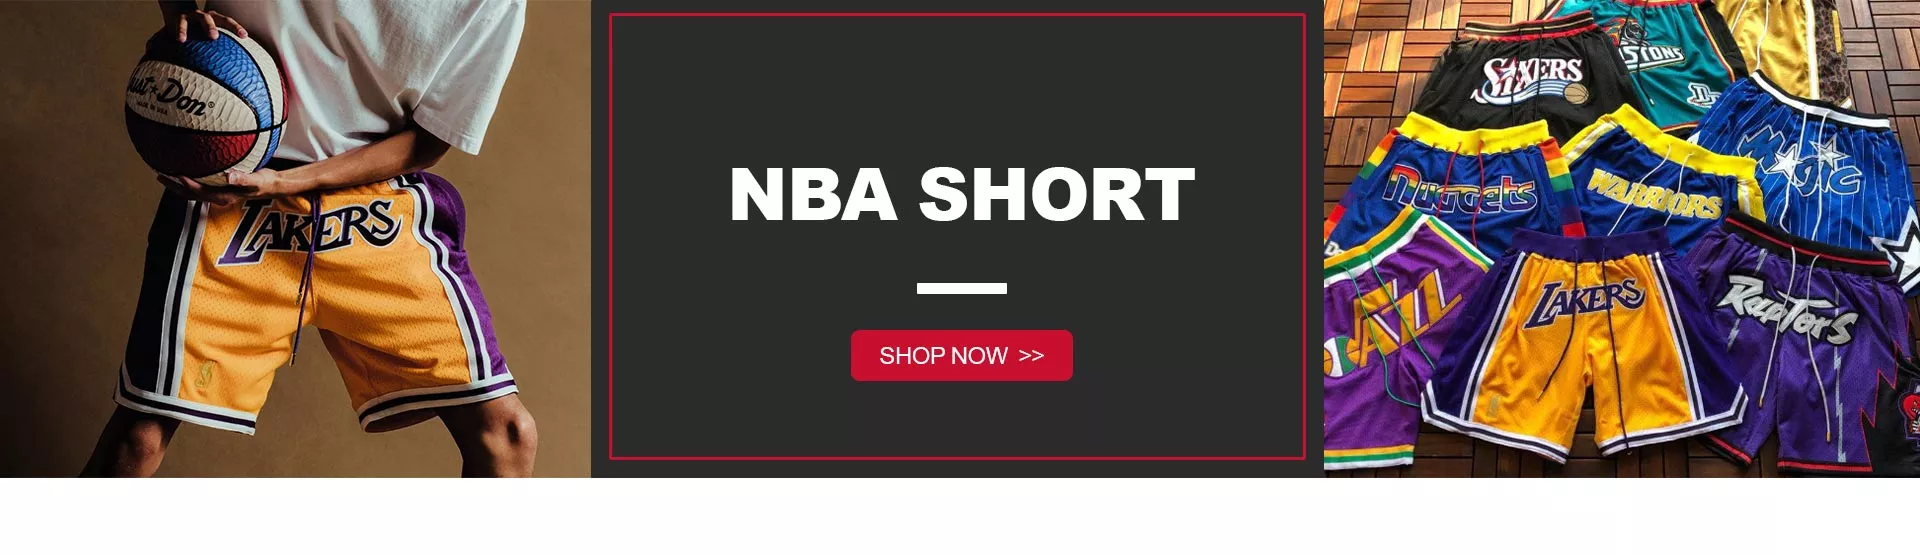 NBA Shorts - basketball-jersey